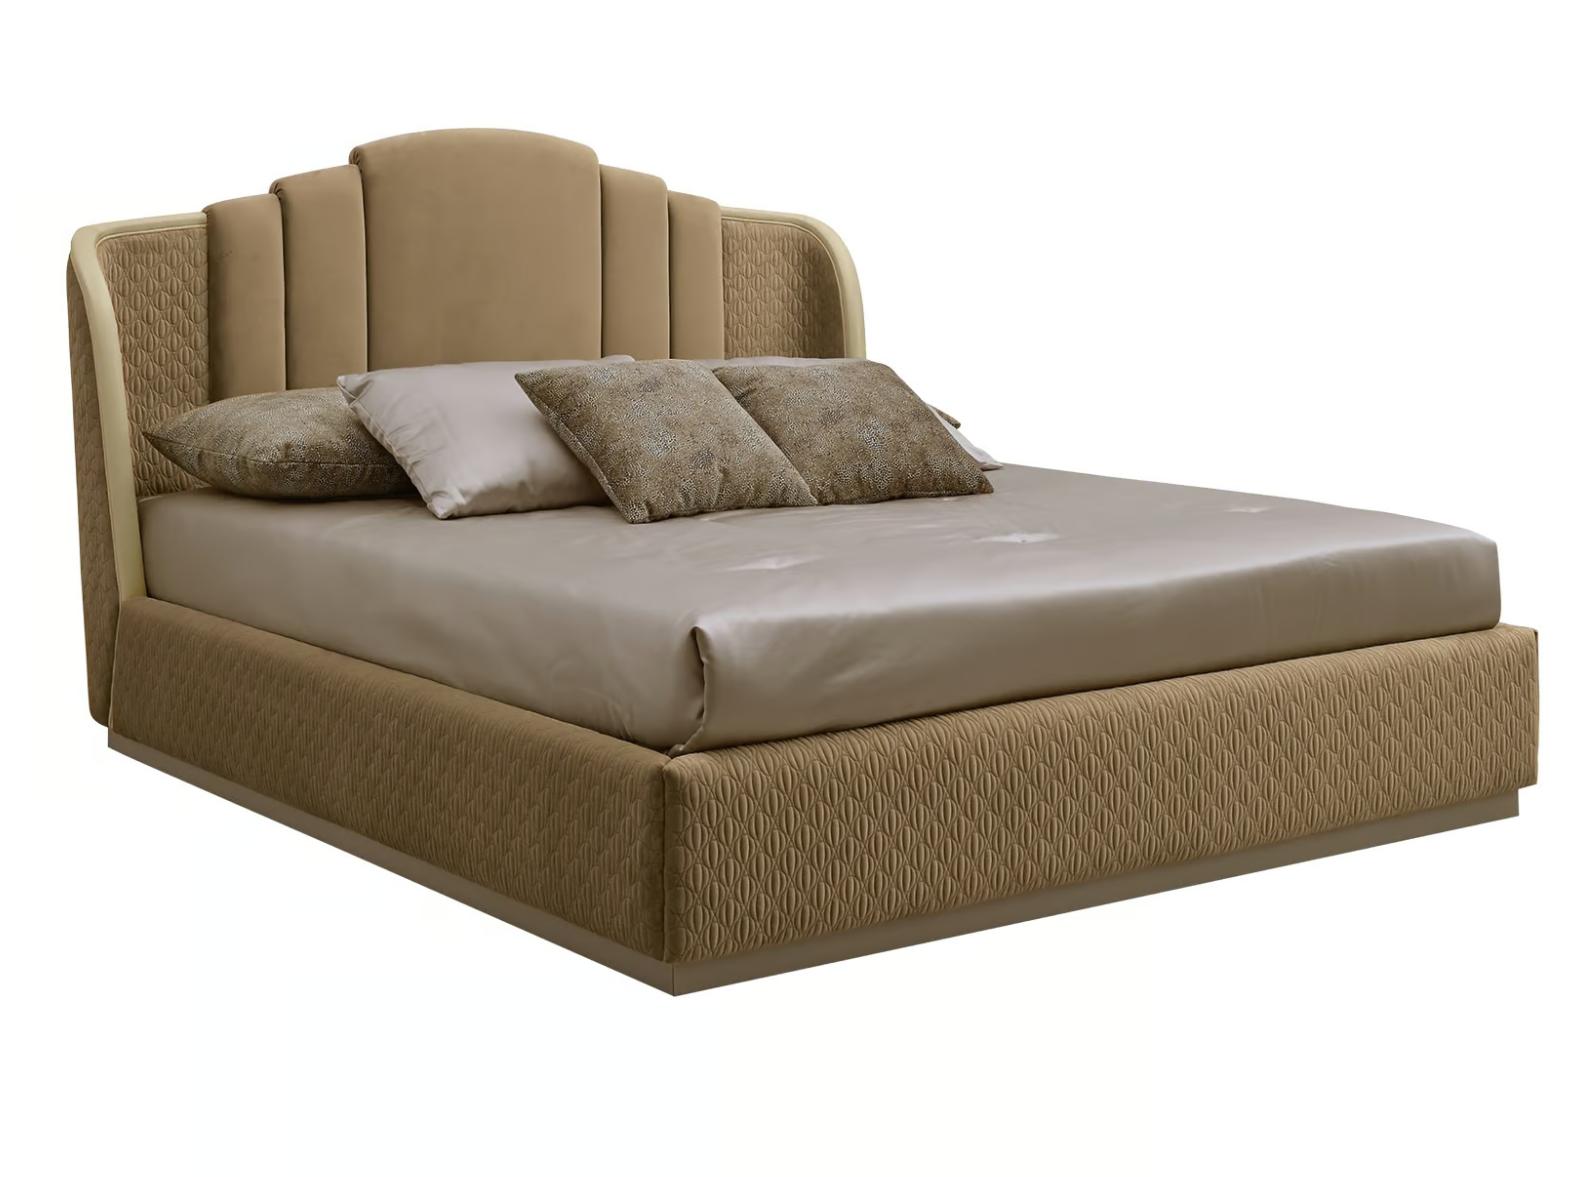 Beige Luxury Bed